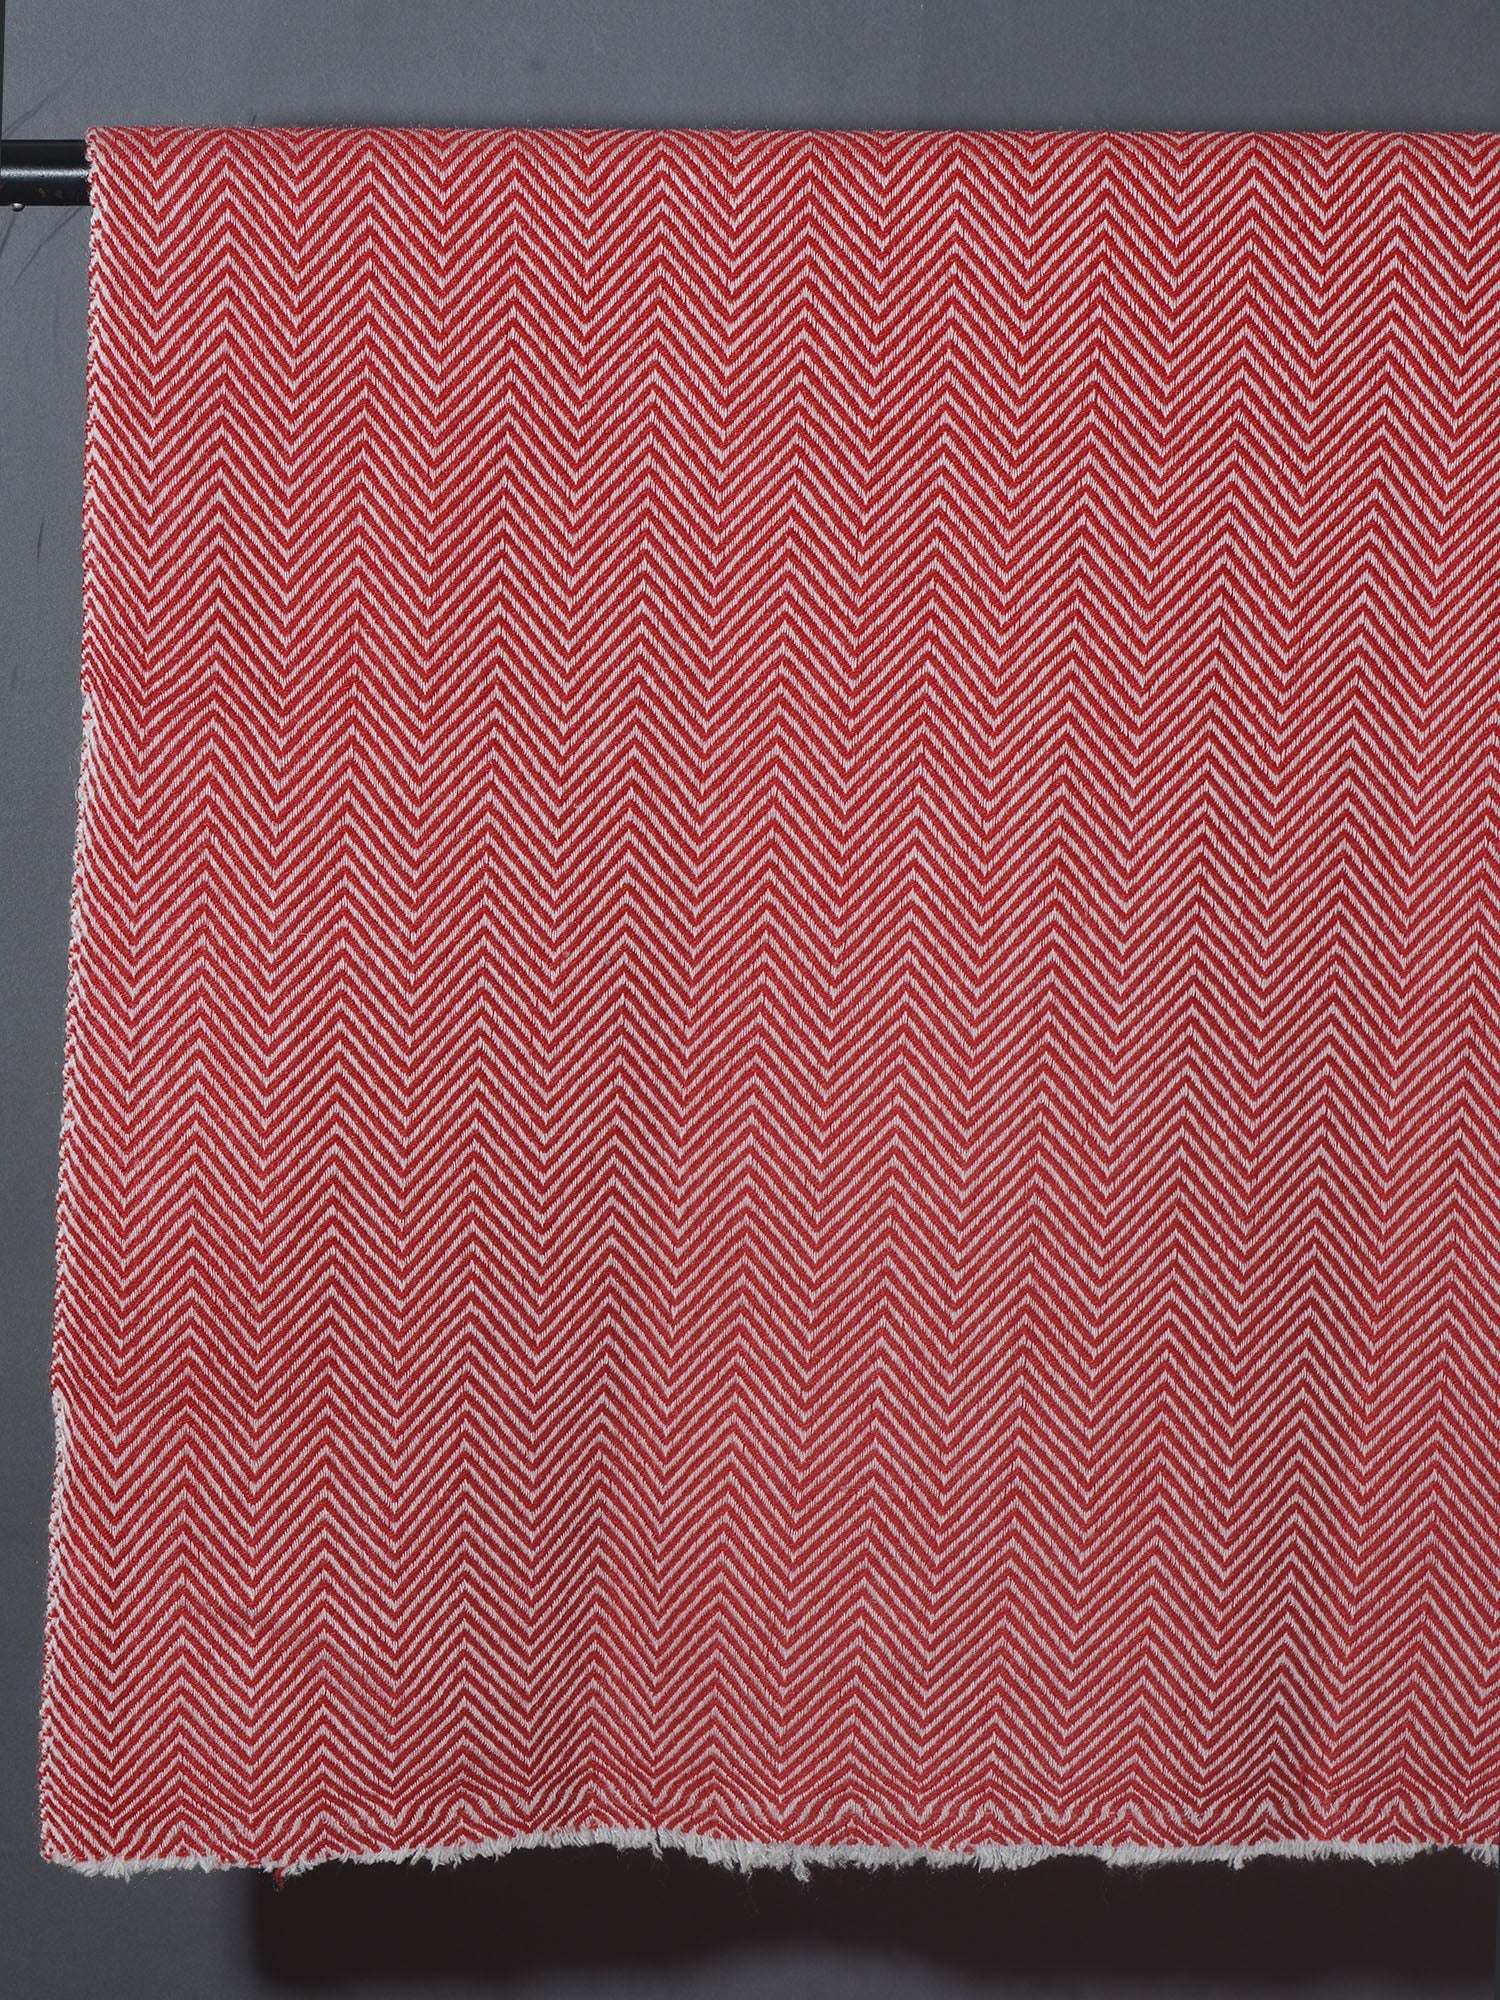 Zig Zag Patterned Super Soft Woolen Muffler -  Red